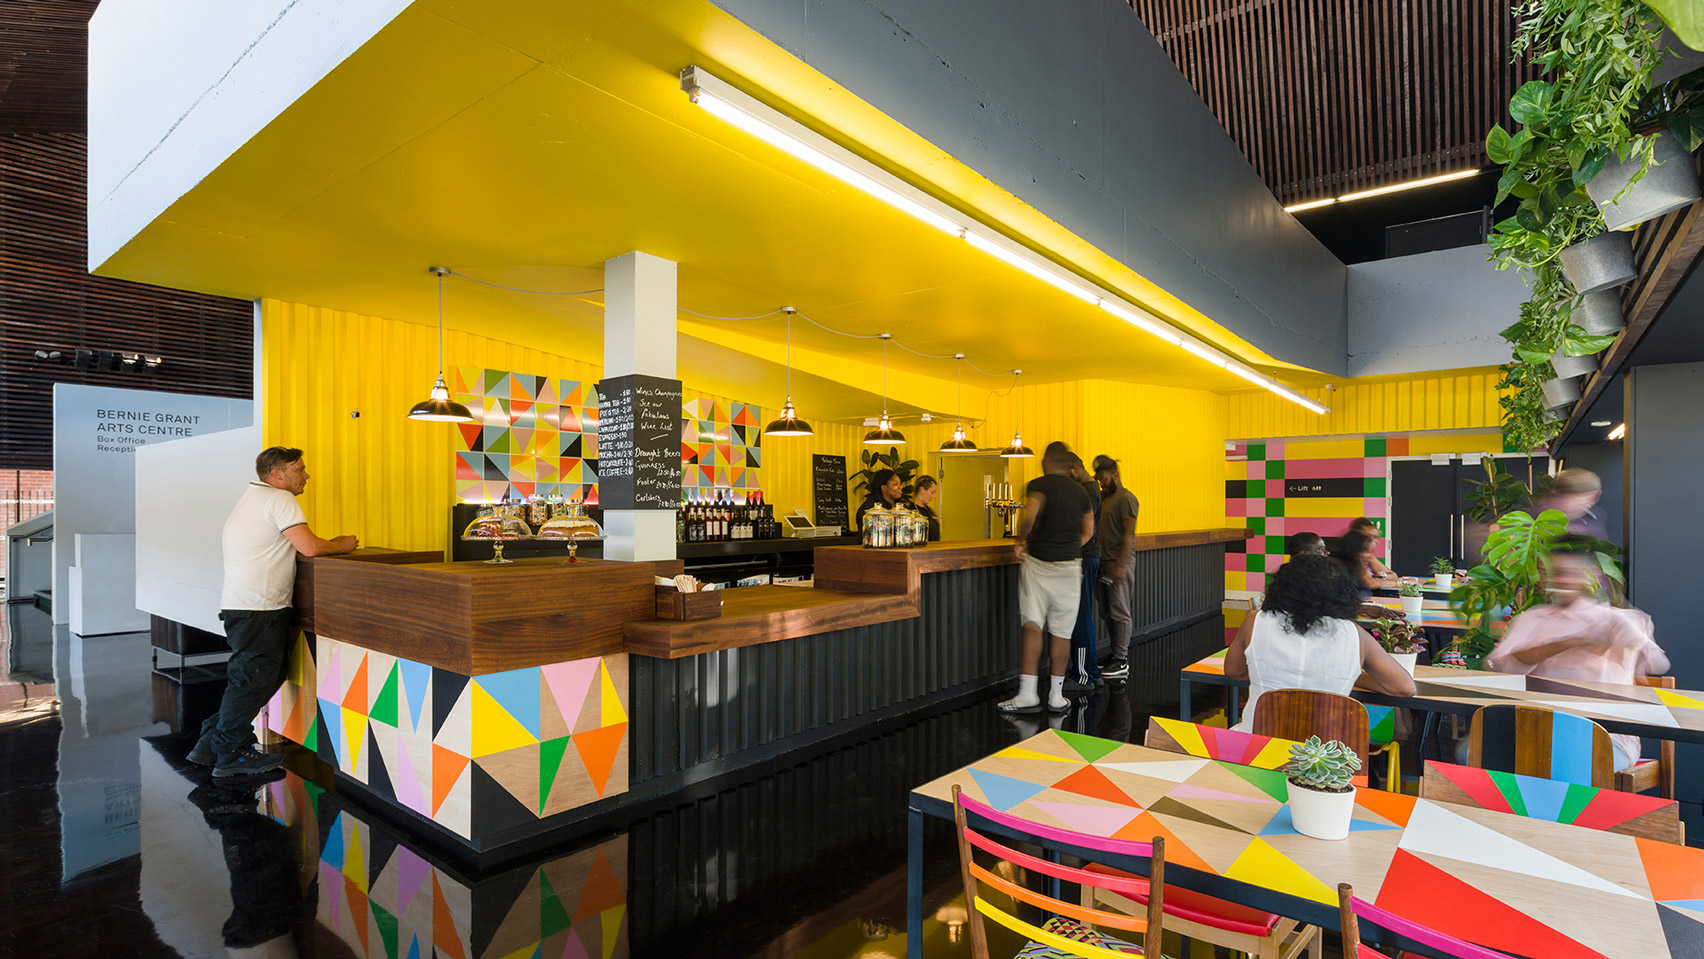 Morag Myerscough designs colourful interiors for London arts centre-0